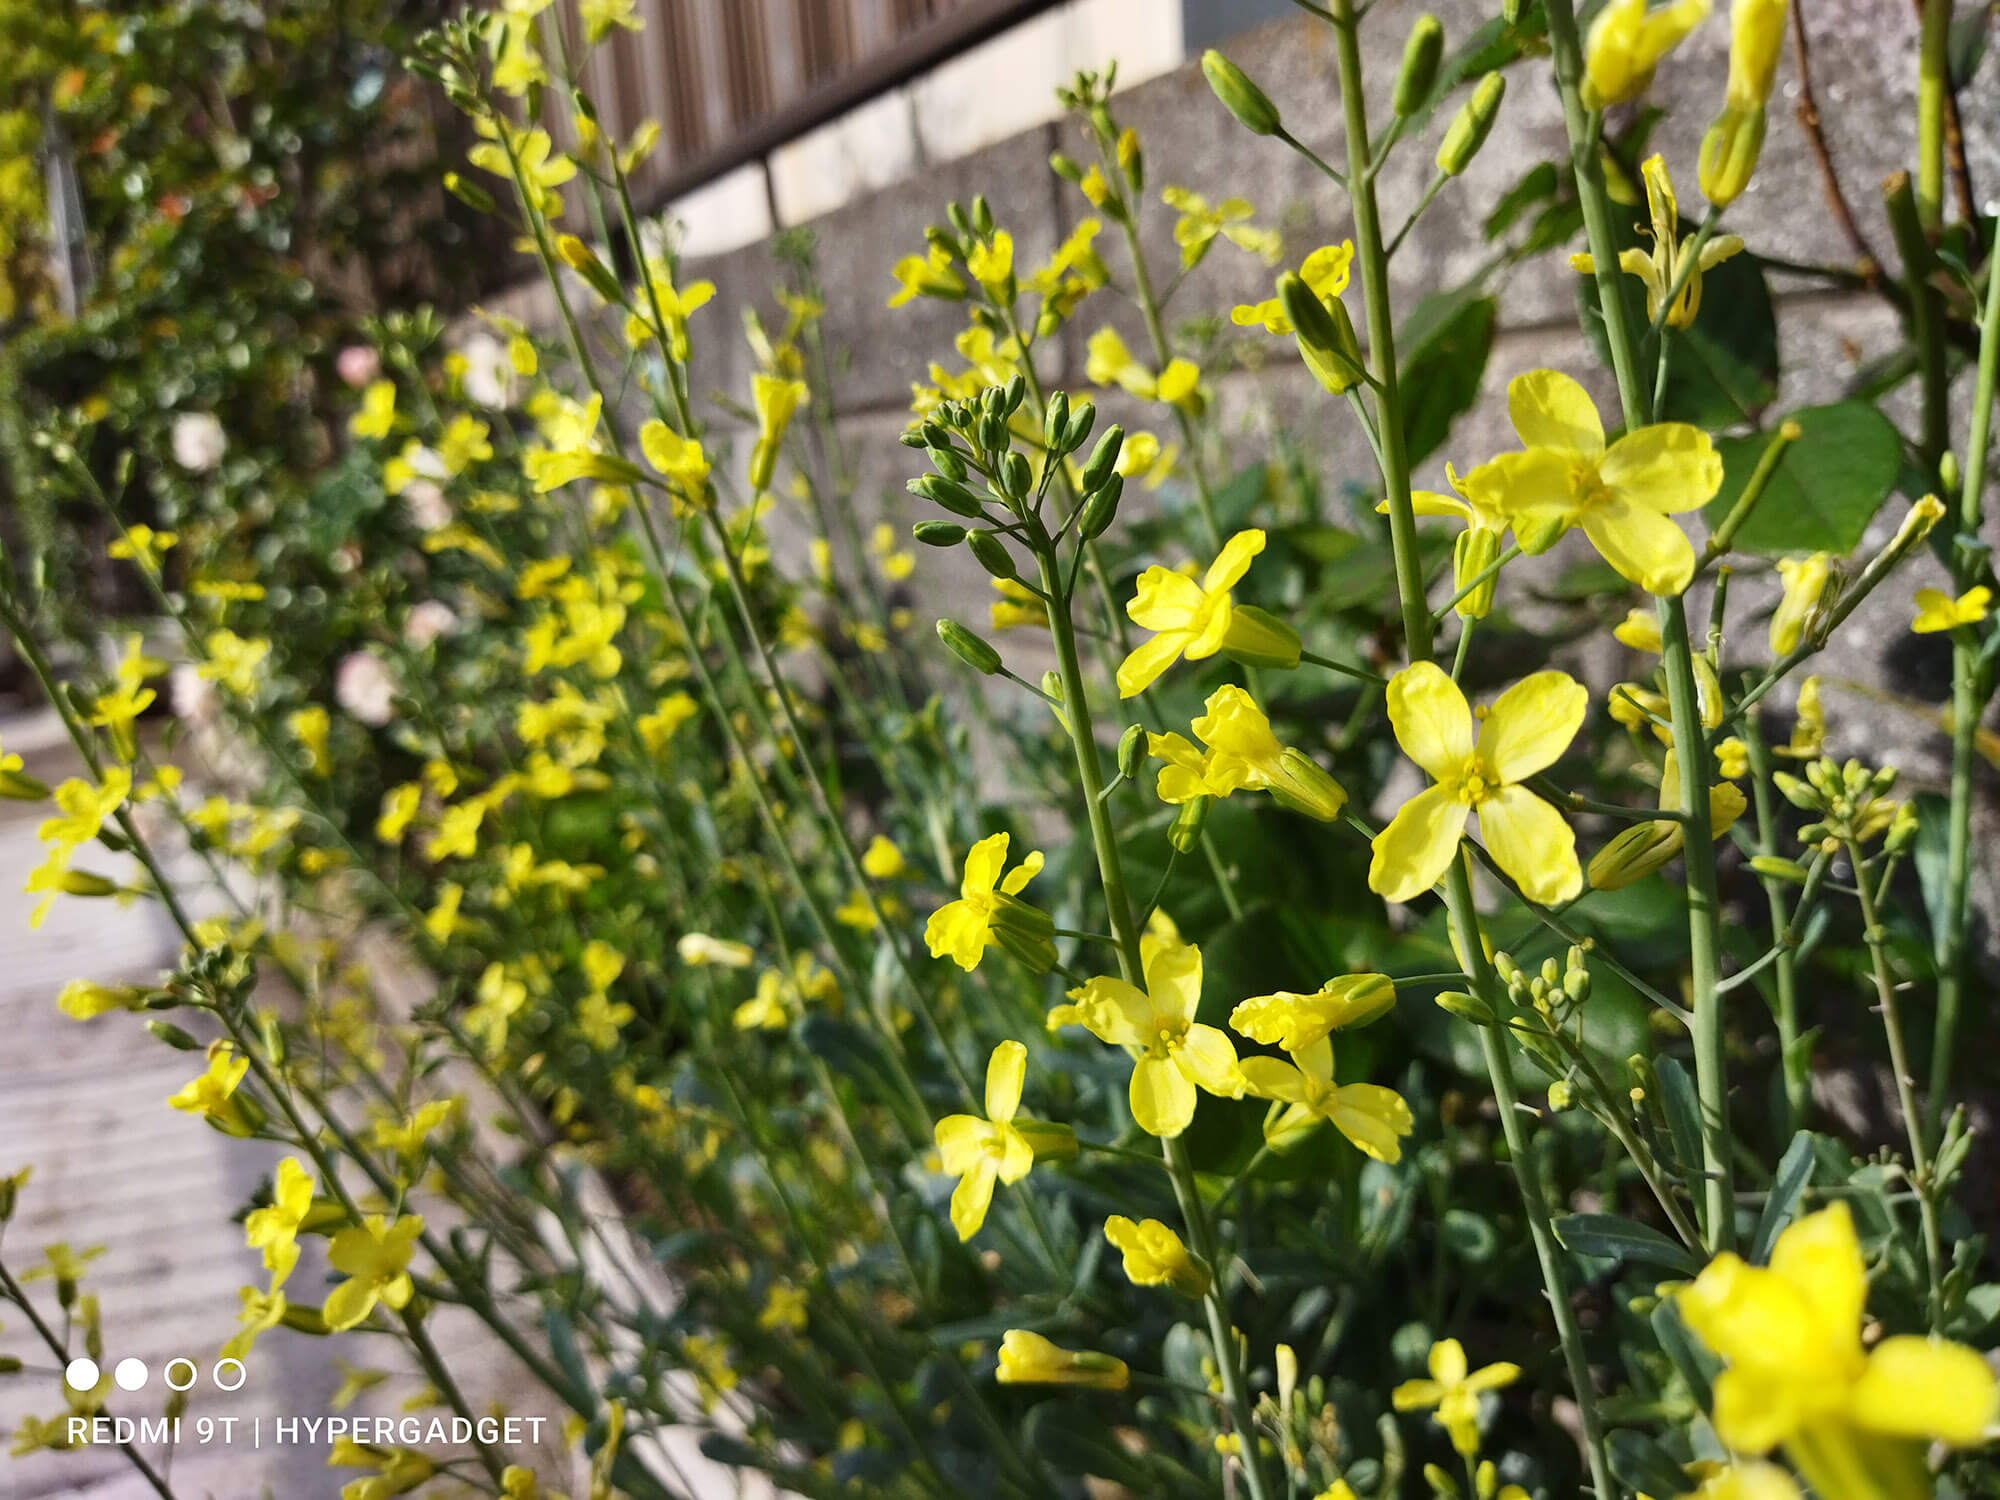 Redmi 9Tのカメラで撮影した黄色い花